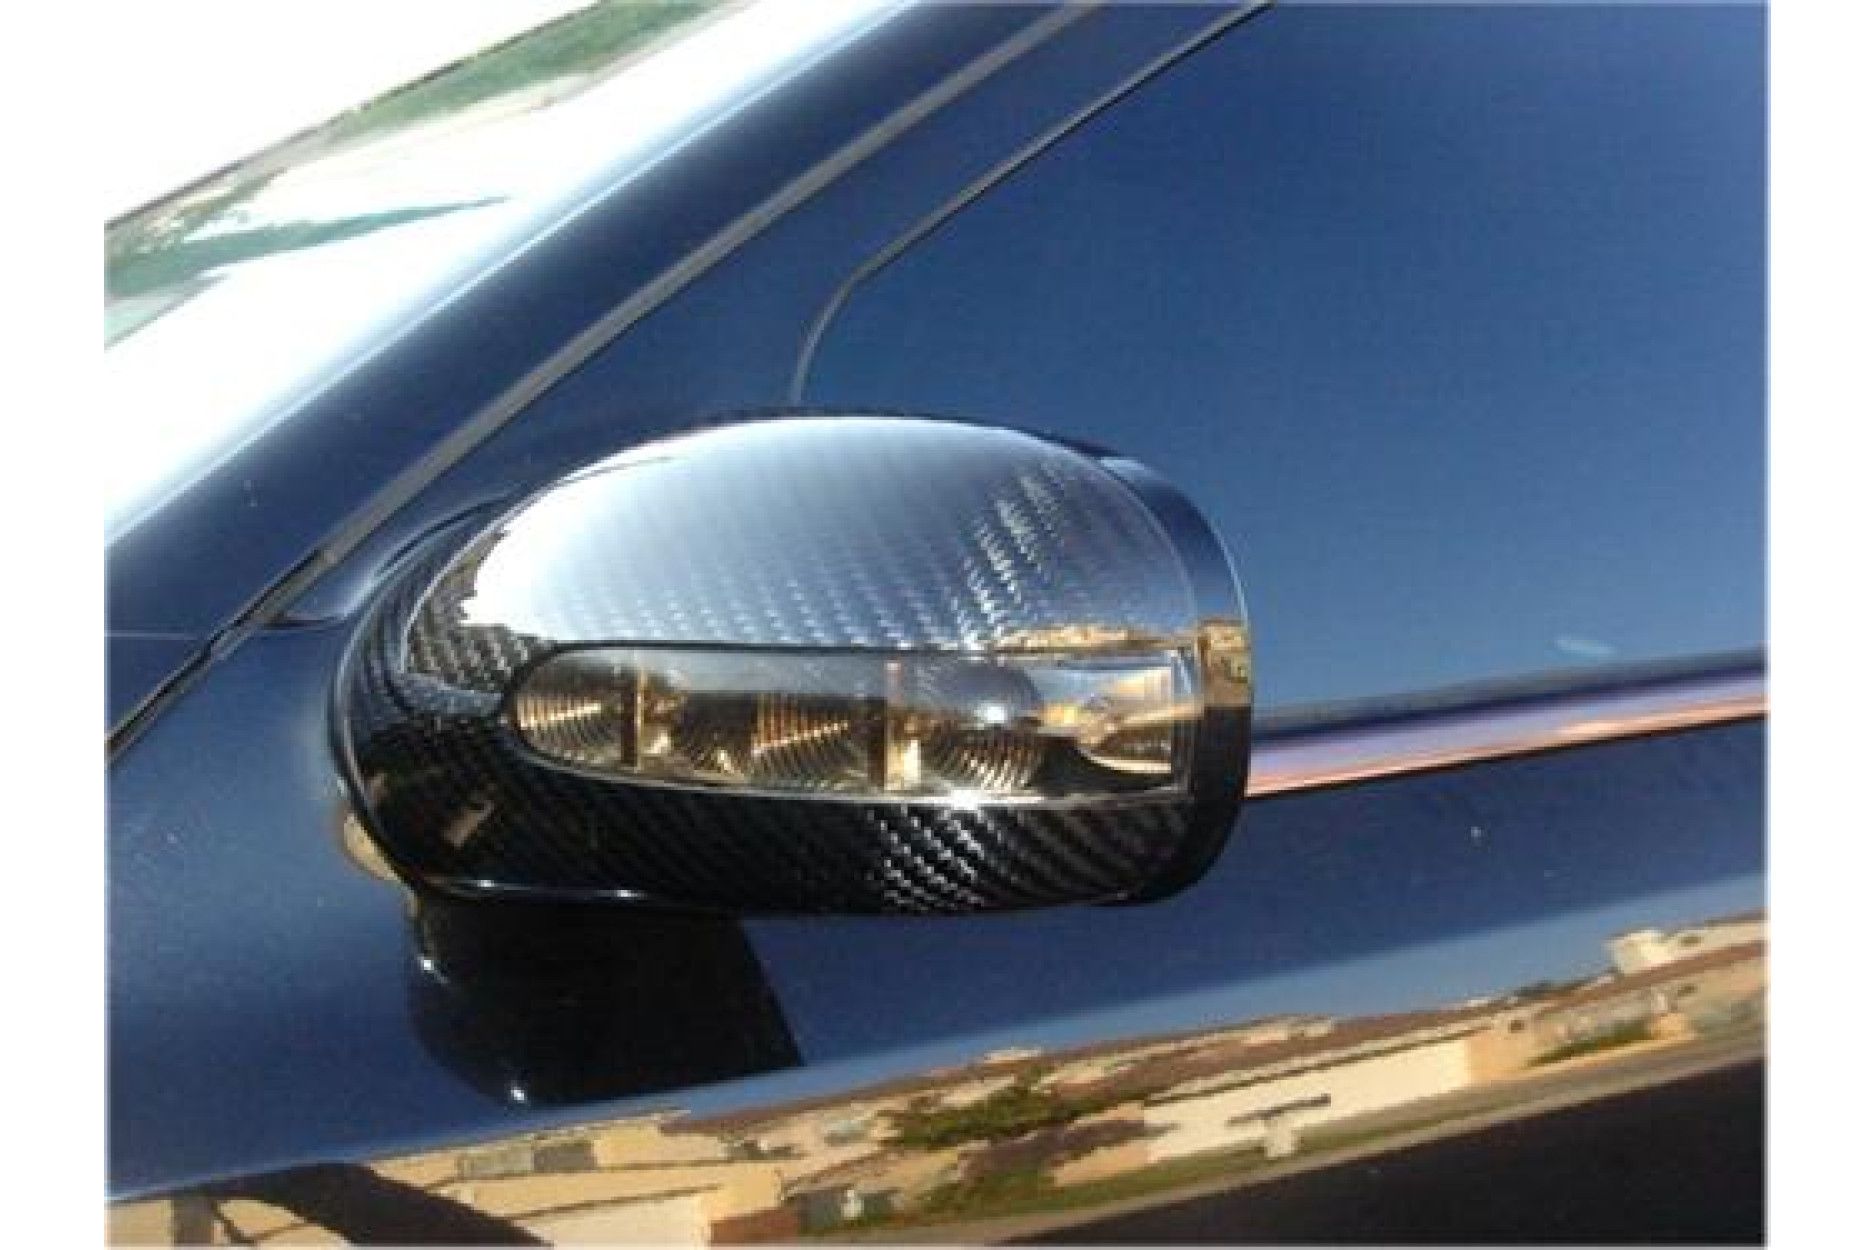 Autotecknic Carbon Spiegelkappen für Mercedes Benz E-Klasse W211